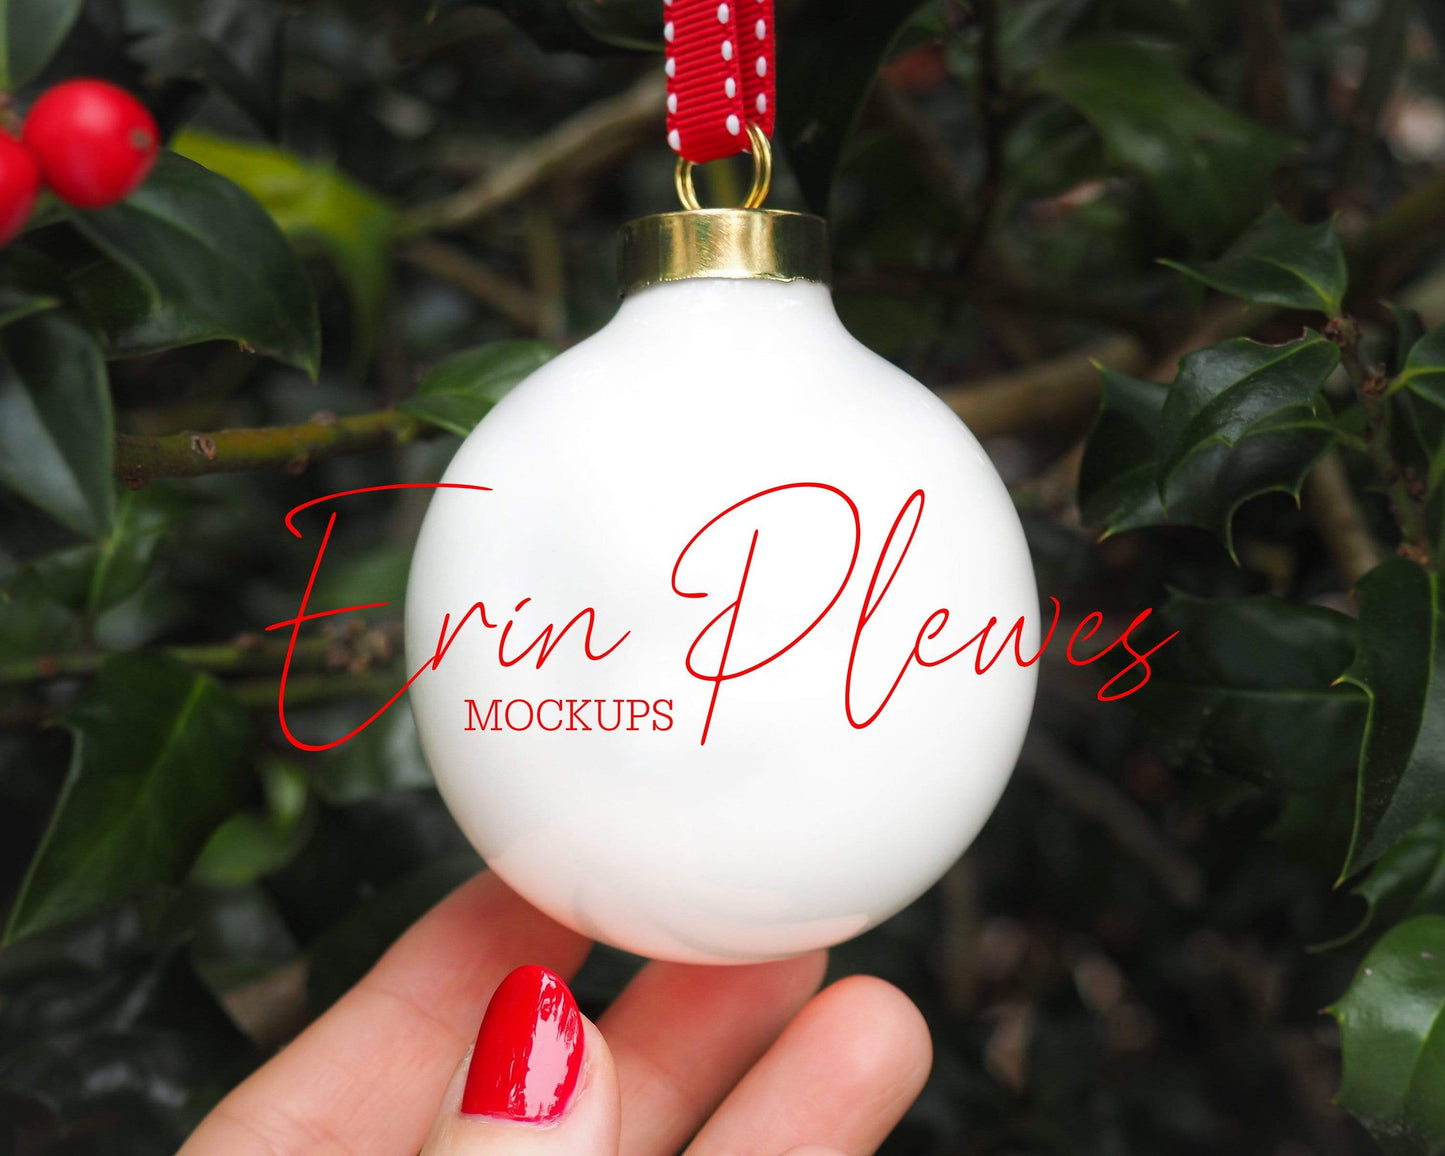 Erin Plewes Mockups Ornament Mockup, Christmas Ball Ornament Mock-up, Ornament Mock Up Stock Photo, Instant Digital Download Template Jpeg